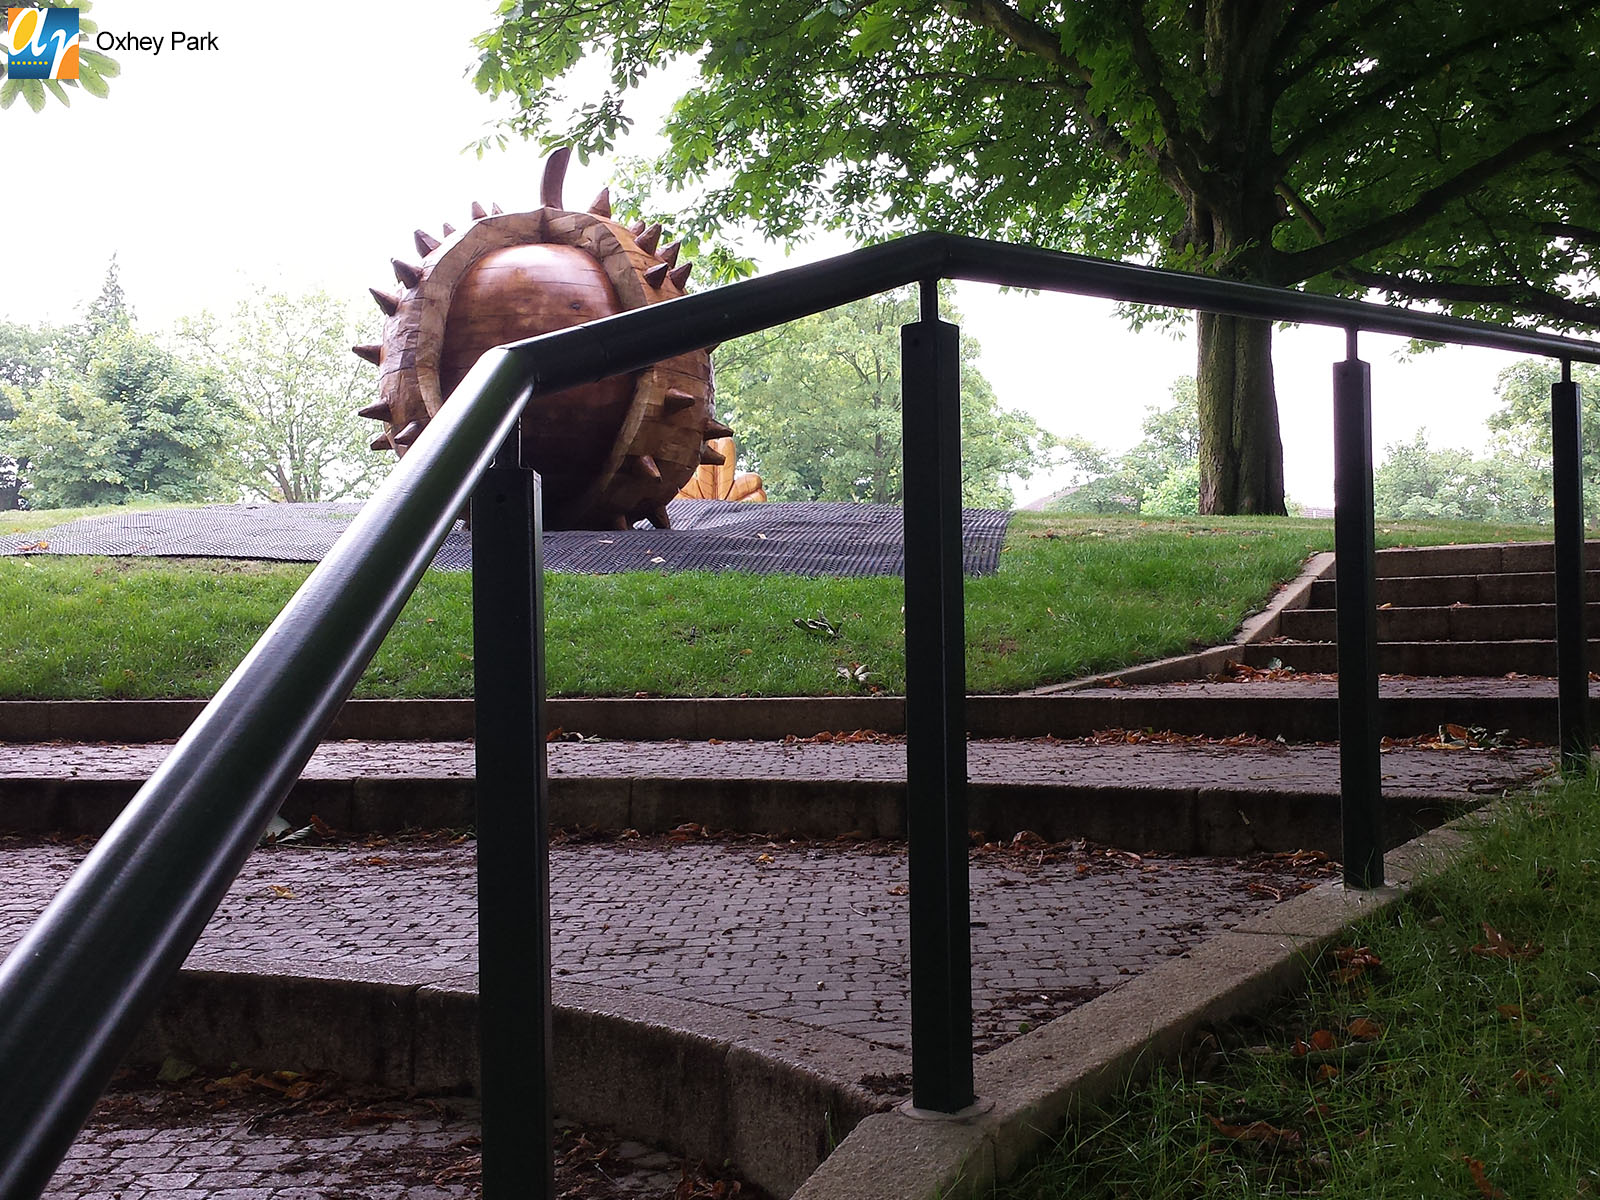 Oxhey Park metal handrail